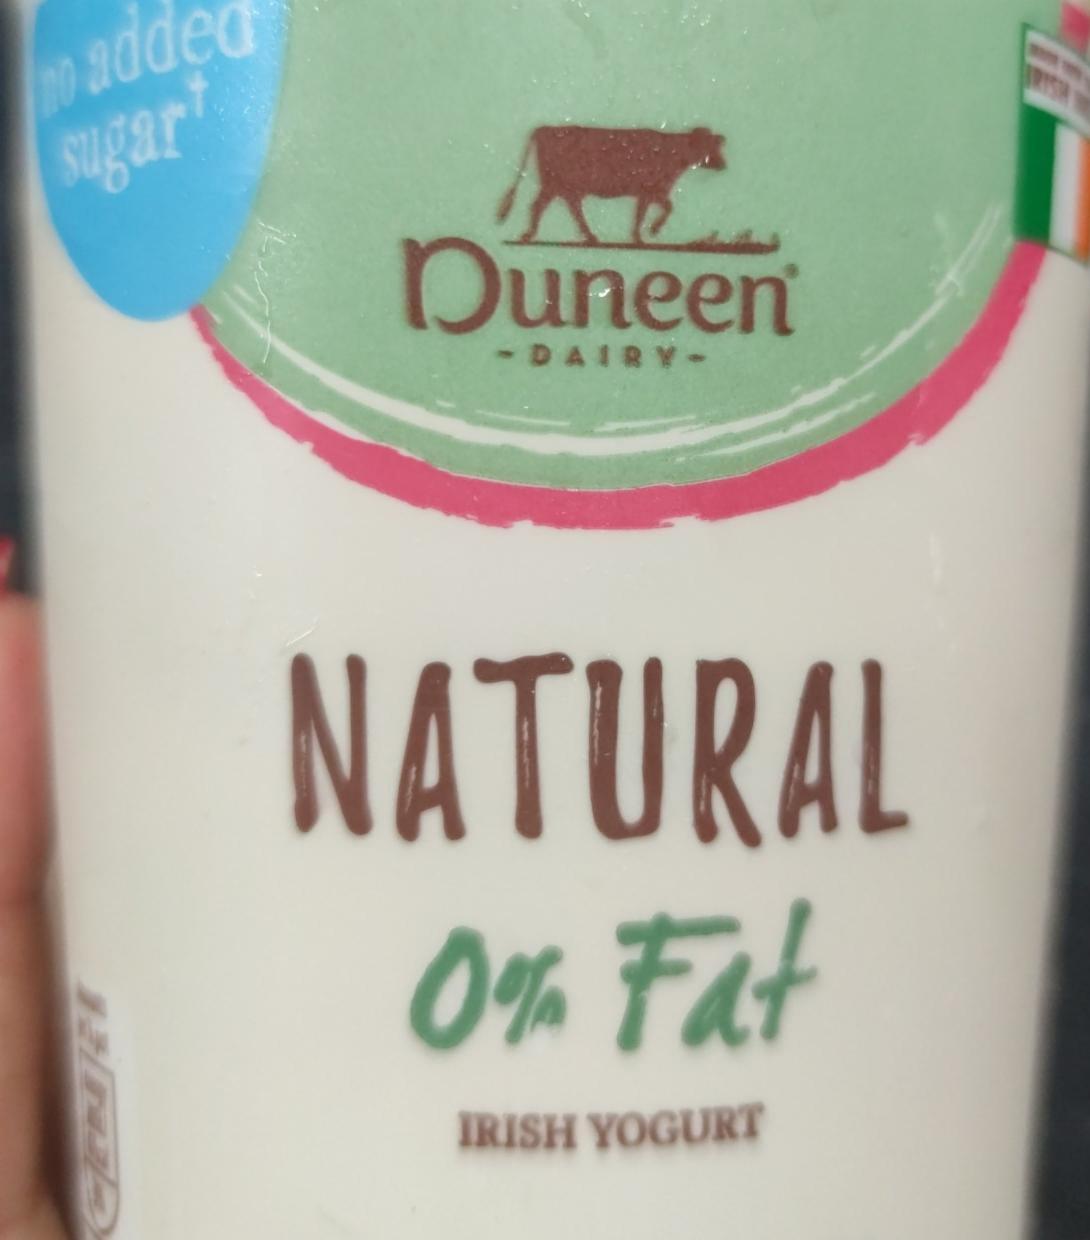 Zdjęcia - natural irish yogurt 0 fat Duneen